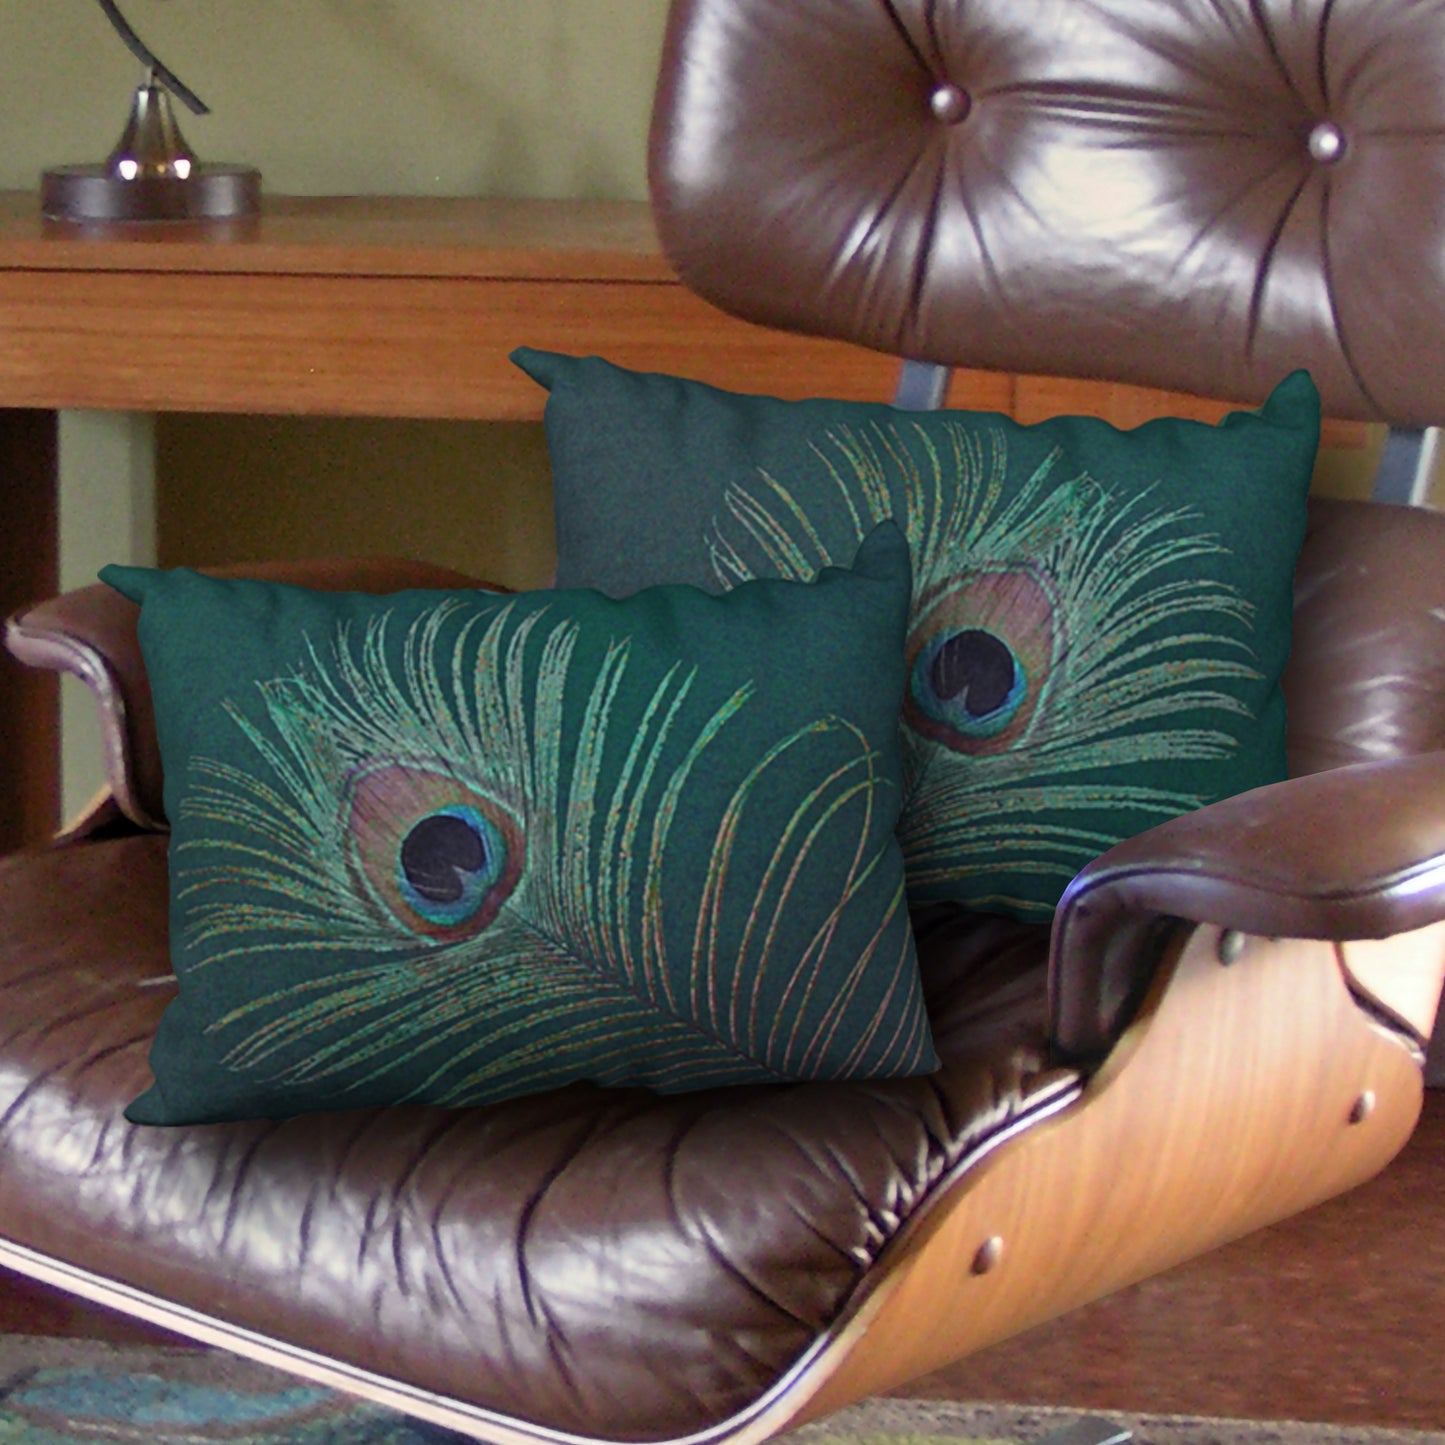 Set of 2 Peacock Feather Designer Pillows, 20"x14"